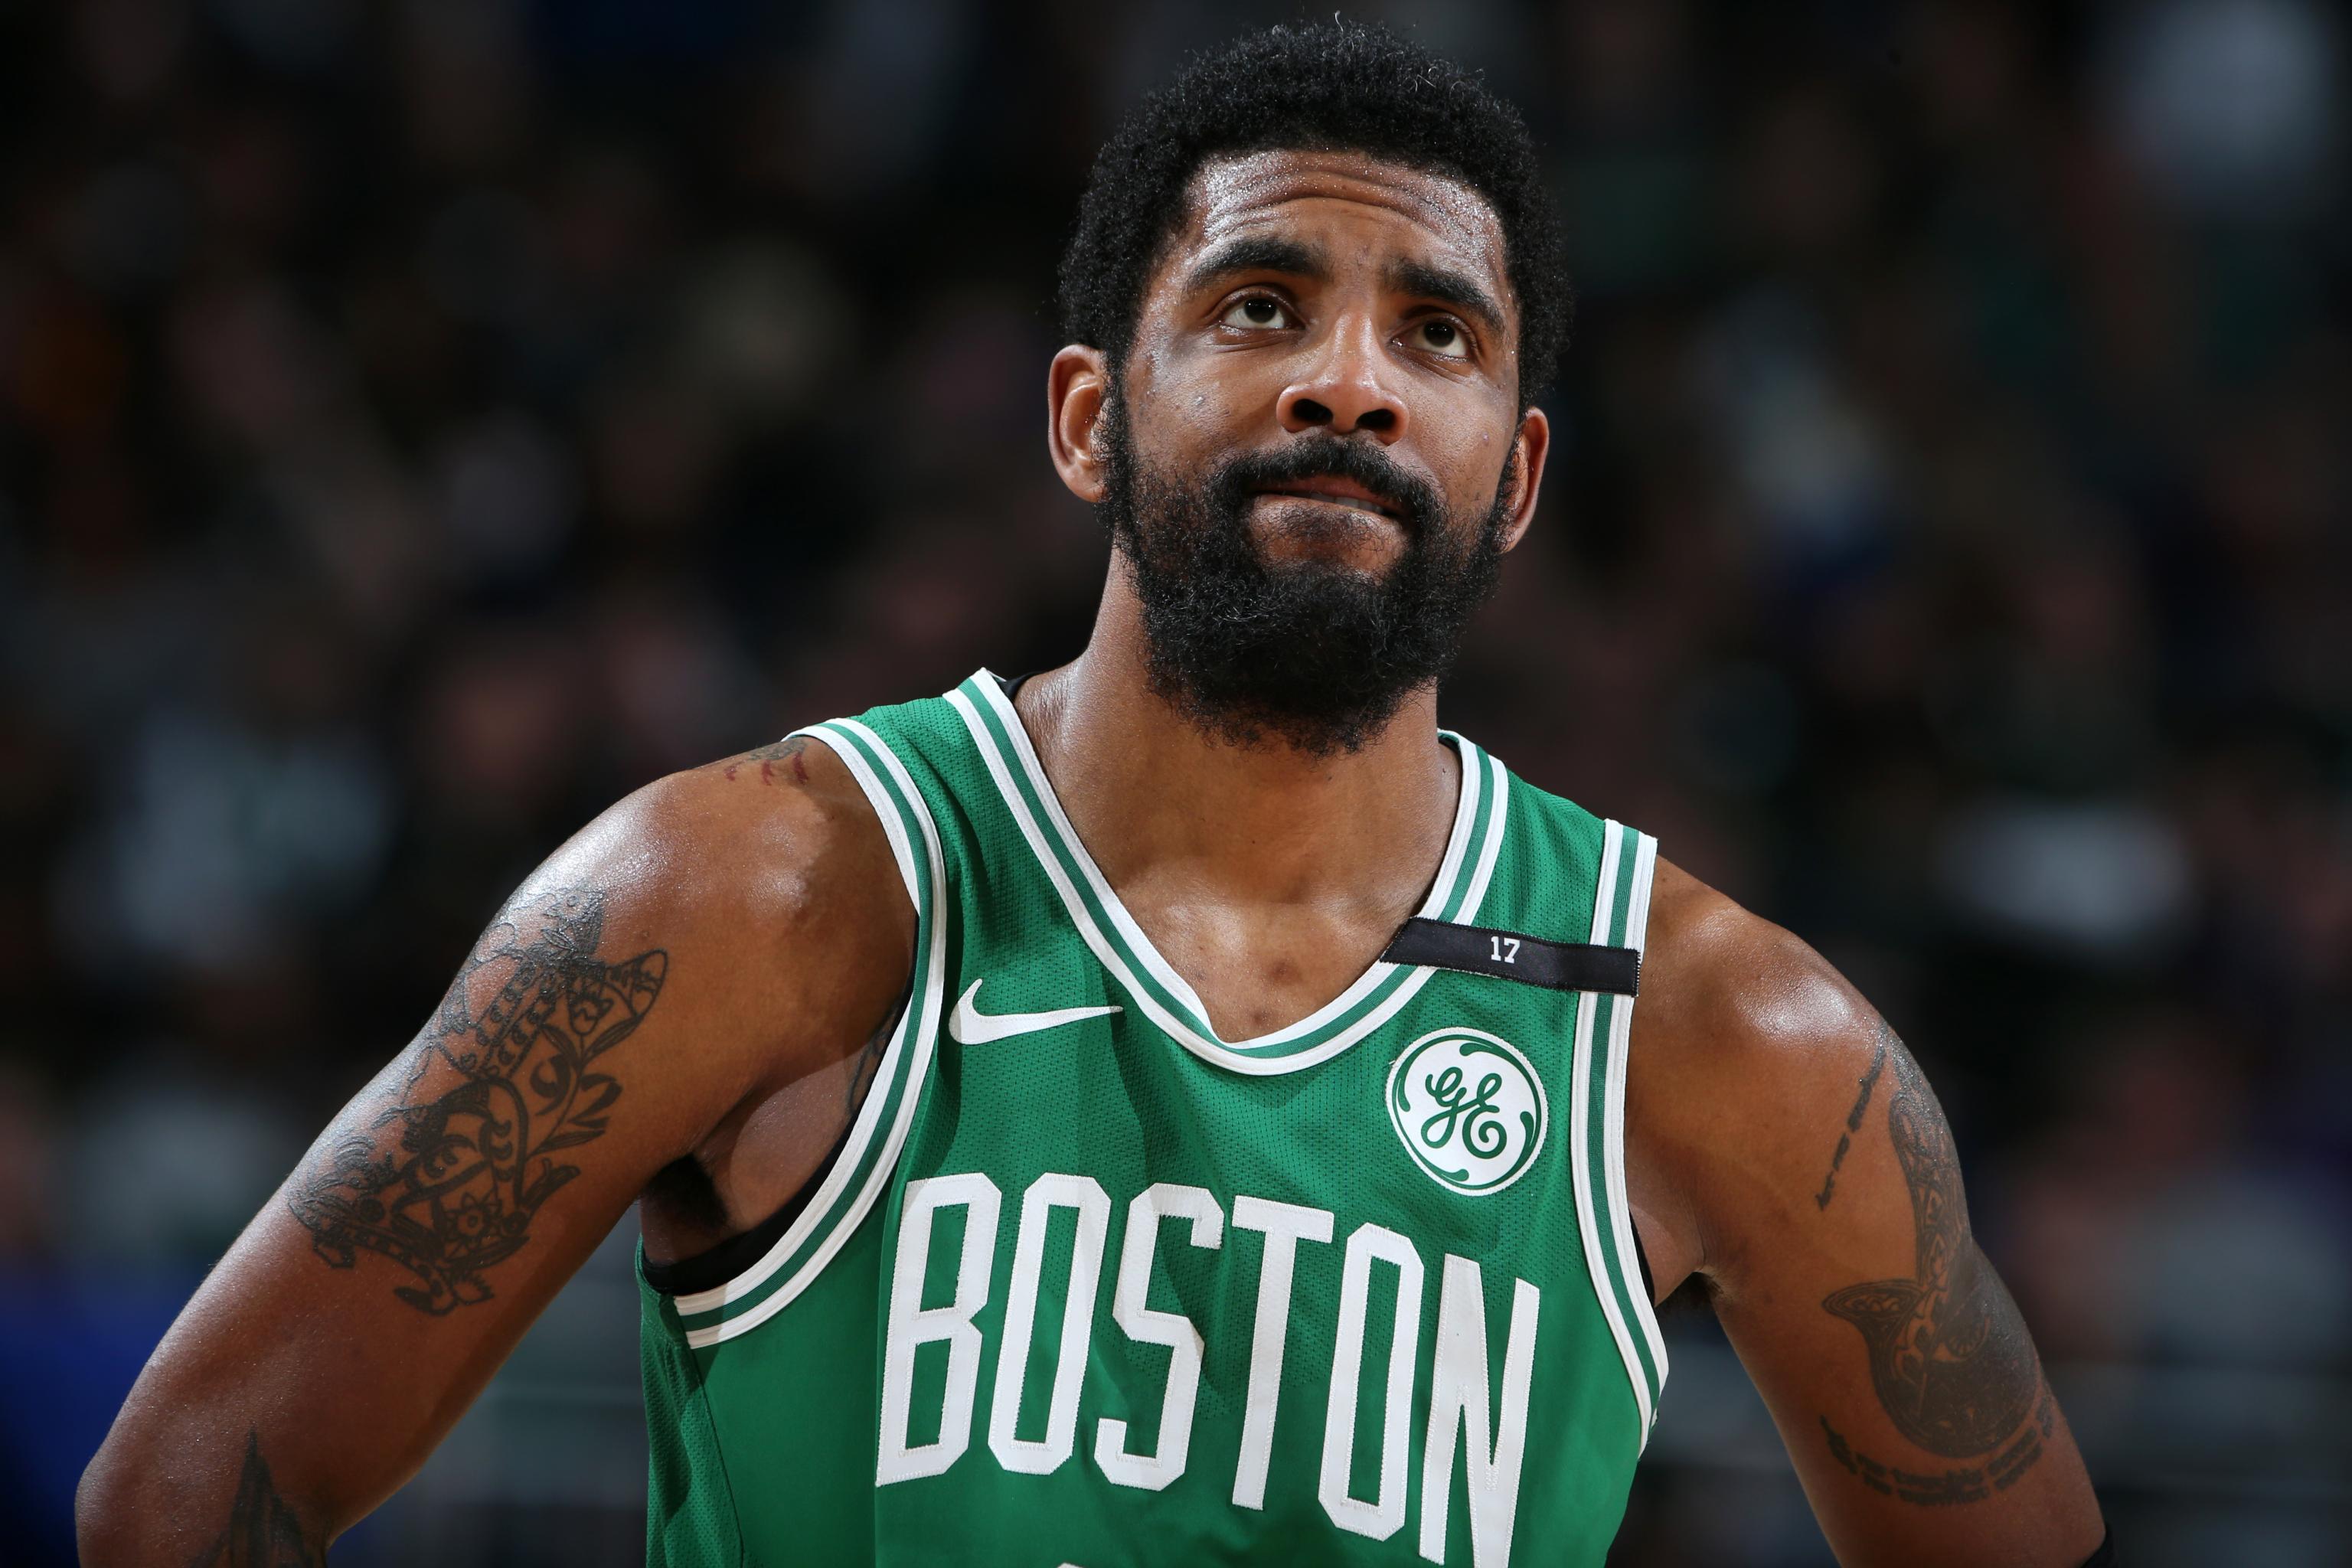 Irving leads Celtics past Mavericks for 16th straight win - Stabroek News